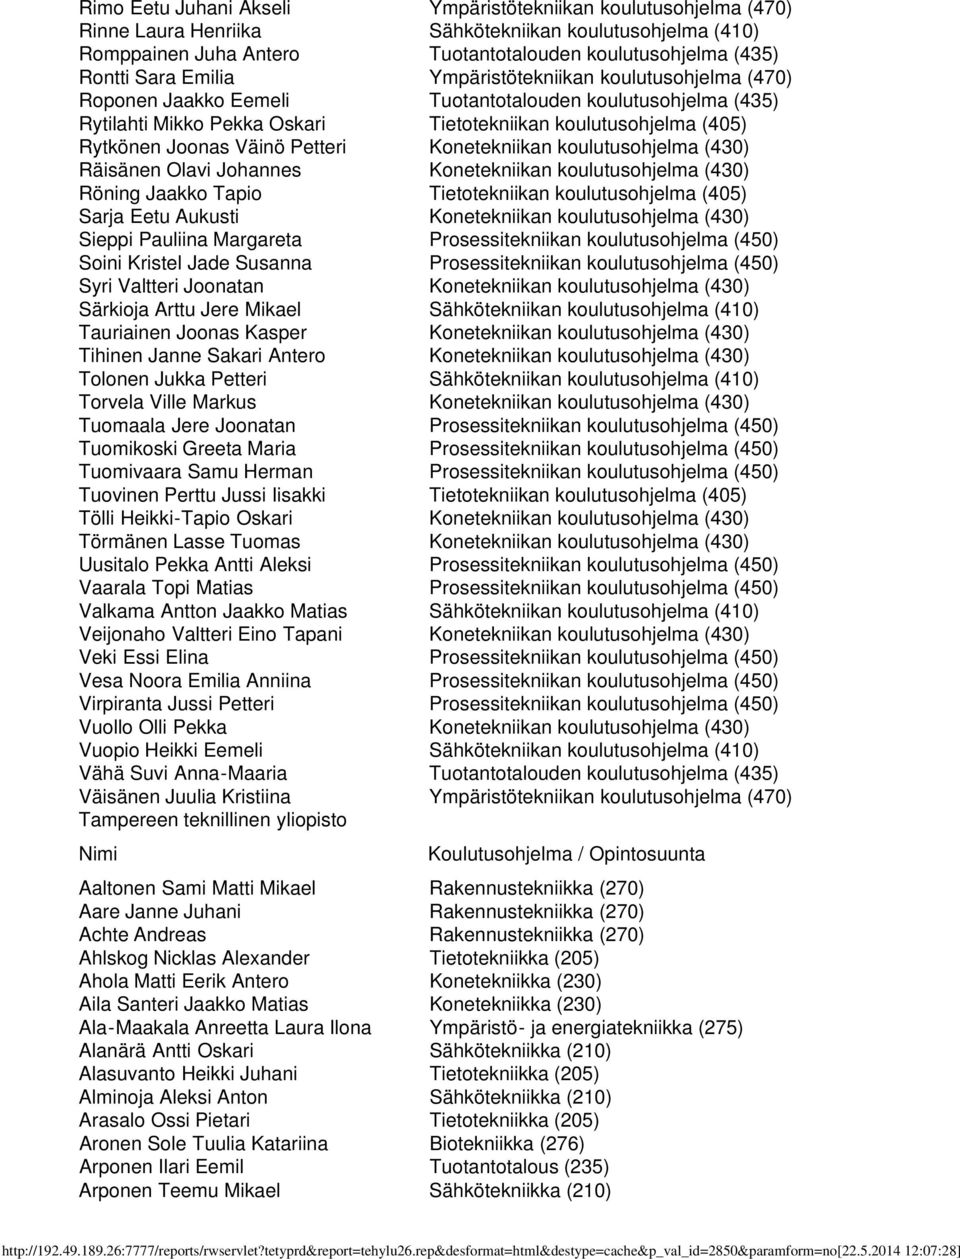 Petteri Konetekniikan koulutusohjelma (430) Räisänen Olavi Johannes Konetekniikan koulutusohjelma (430) Röning Jaakko Tapio Tietotekniikan koulutusohjelma (405) Sarja Eetu Aukusti Konetekniikan